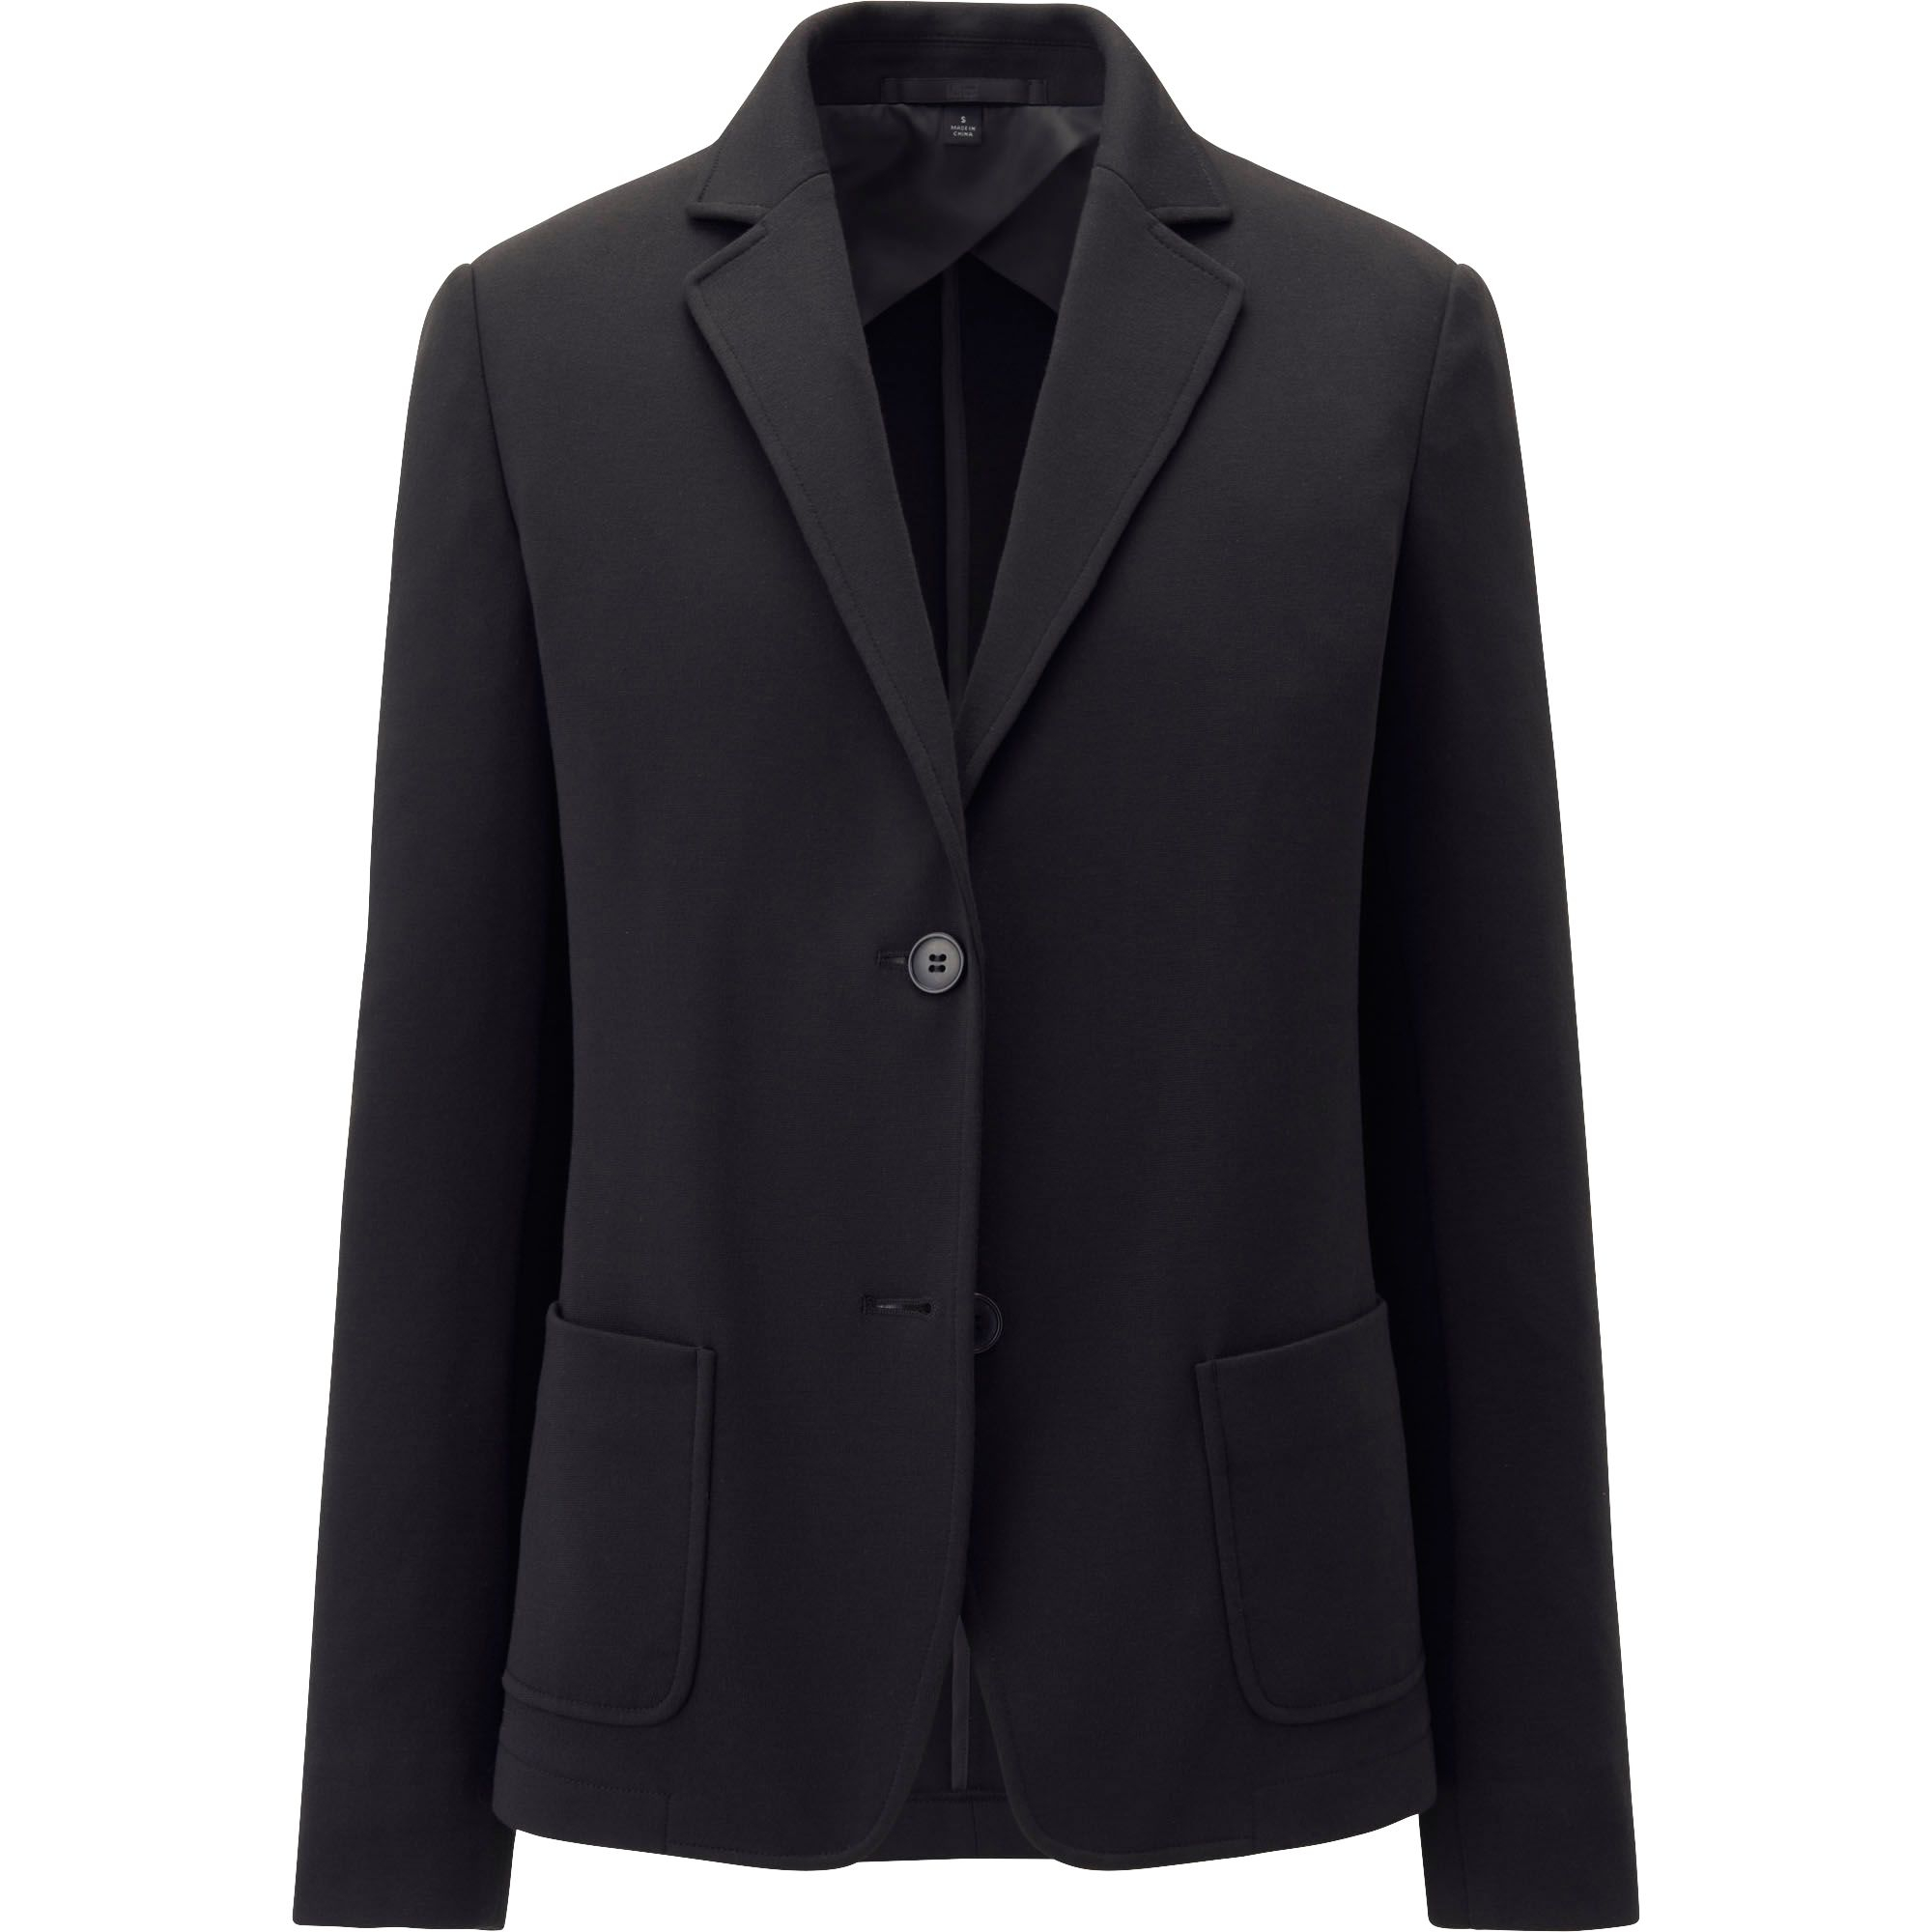 Uniqlo Soft Jersey Jacket in Black | Lyst